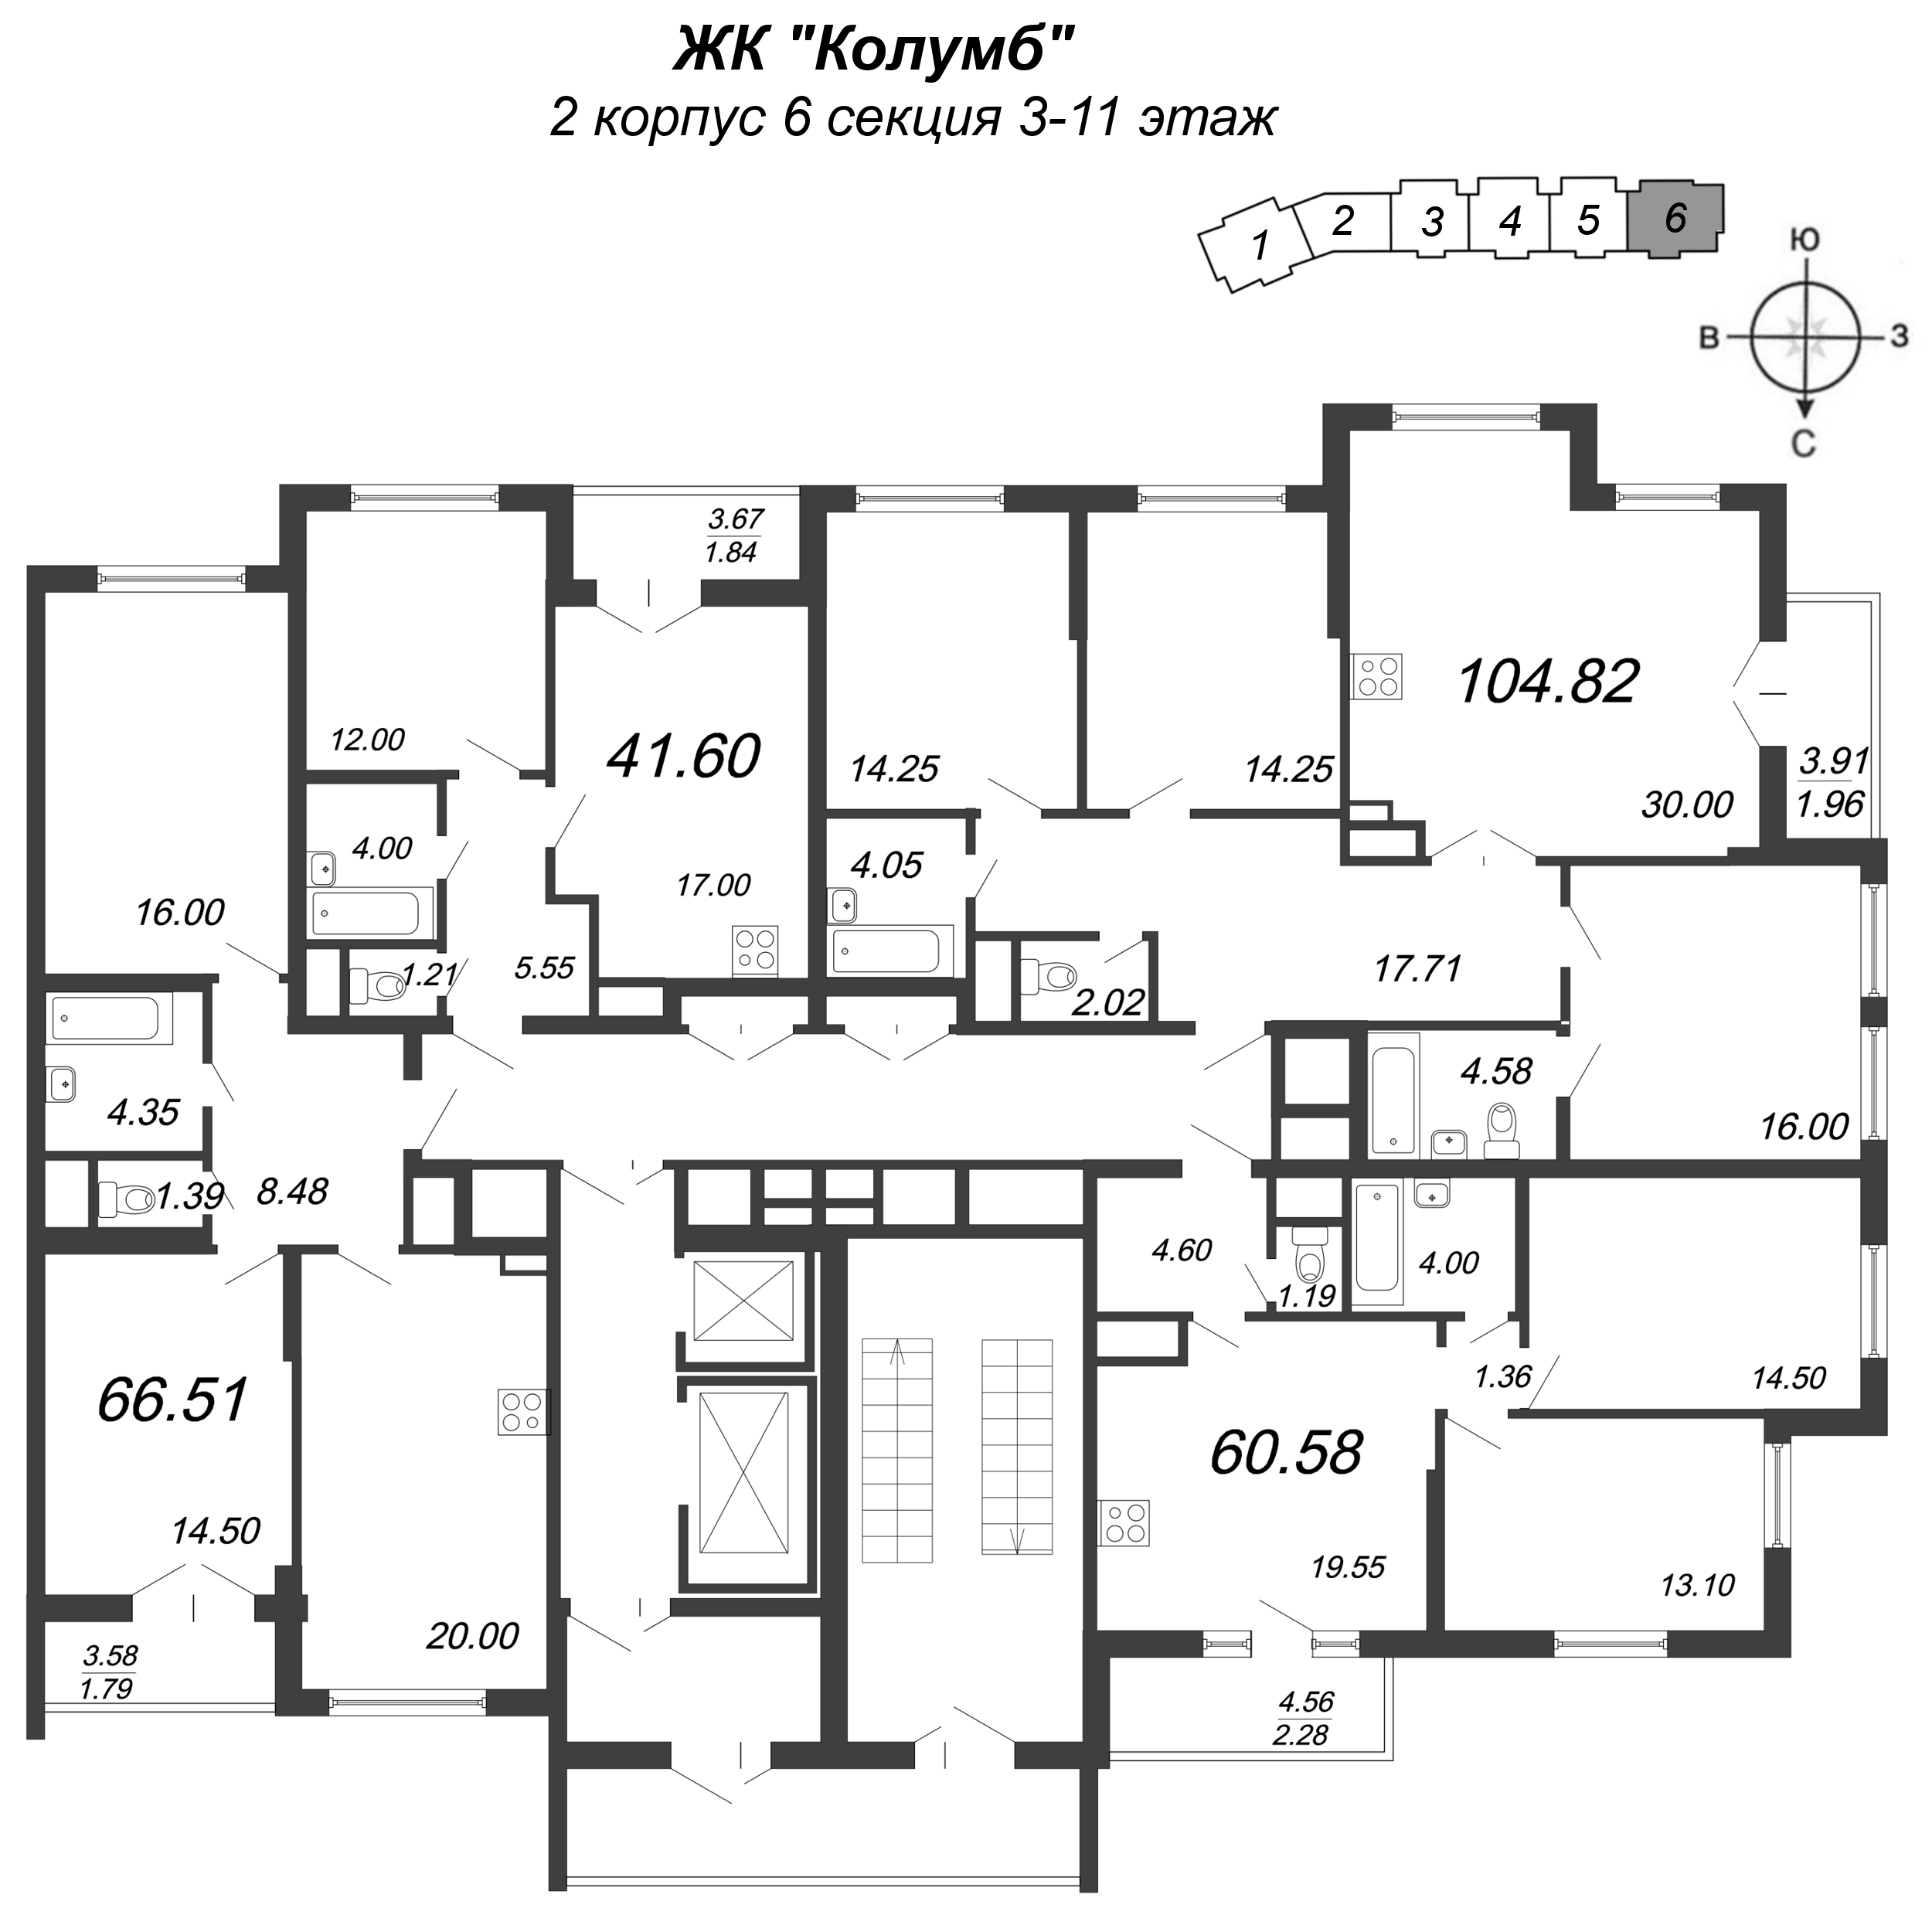 2-комнатная (Евро) квартира, 42.1 м² - планировка этажа